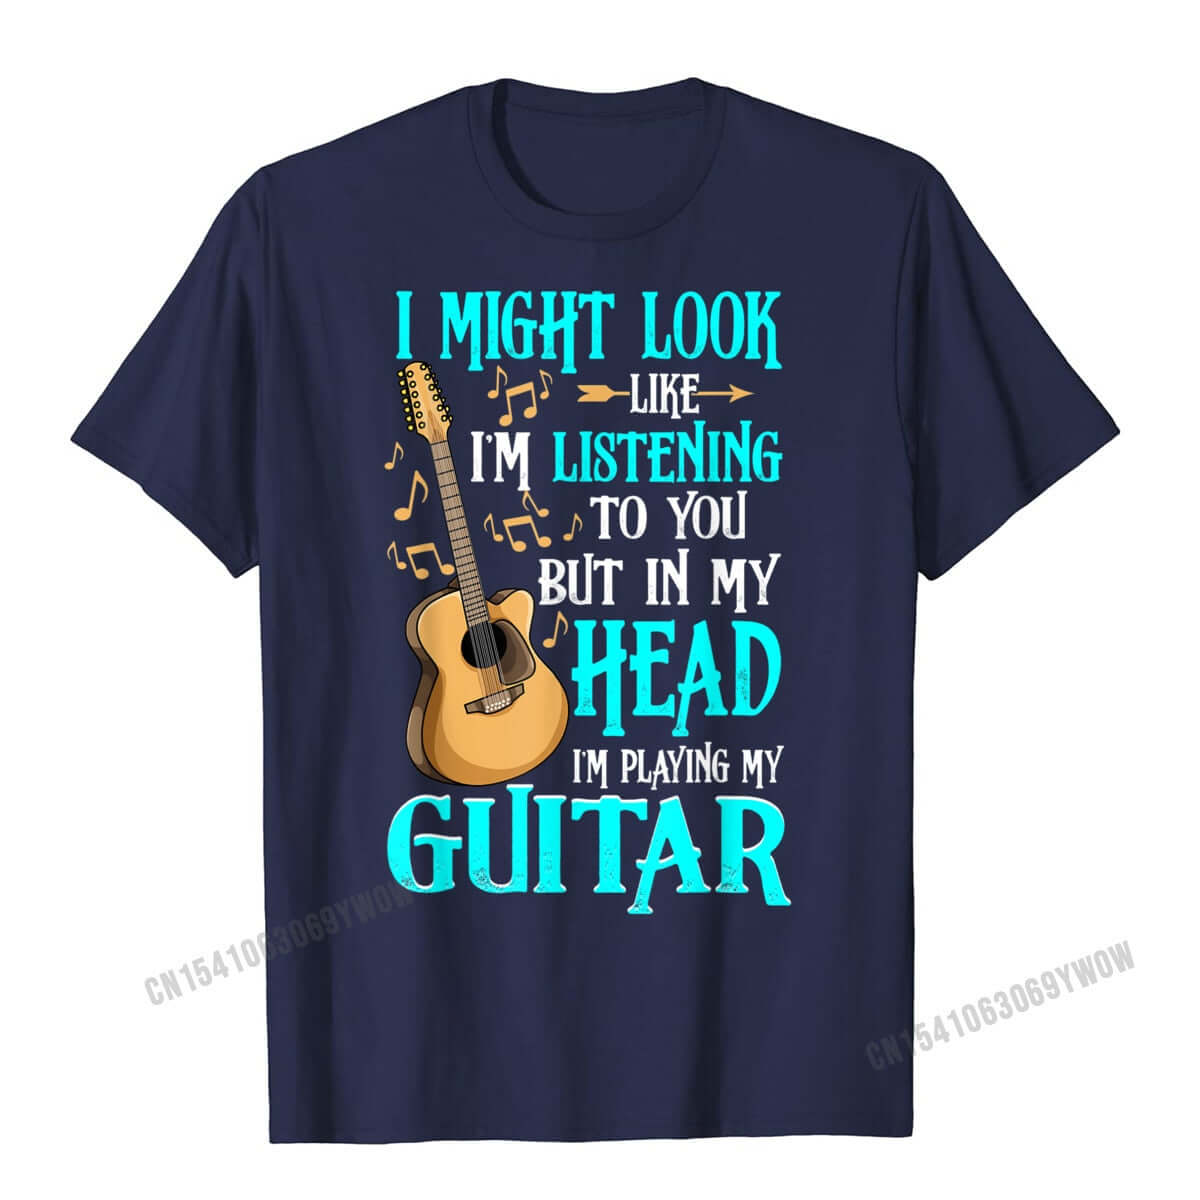 Unique and funny guitar print t-shirt Navy Blue guitarmetrics